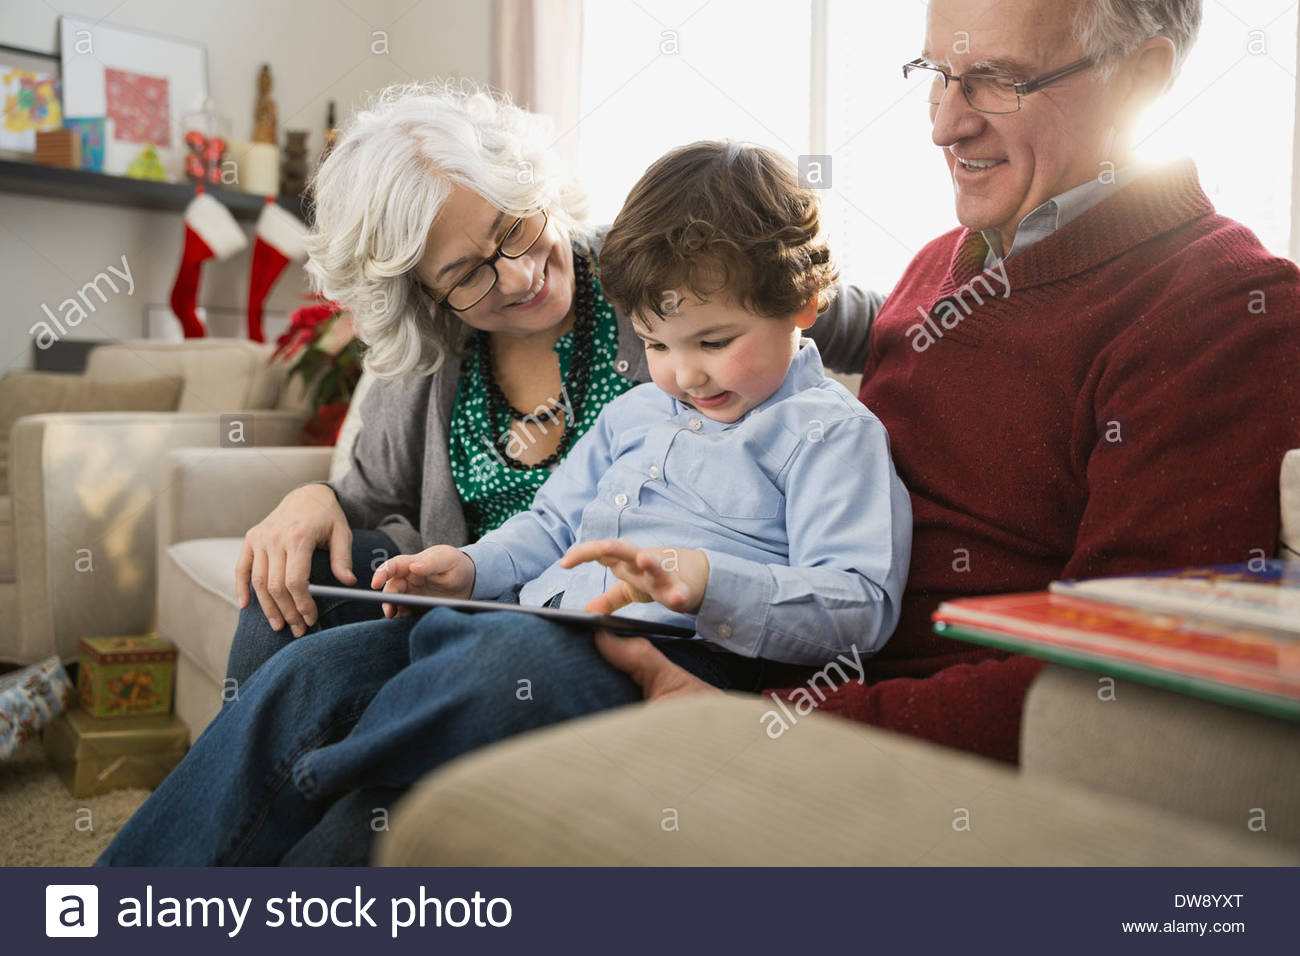 Grandparents and grandson using digital tablet together Stock Photo